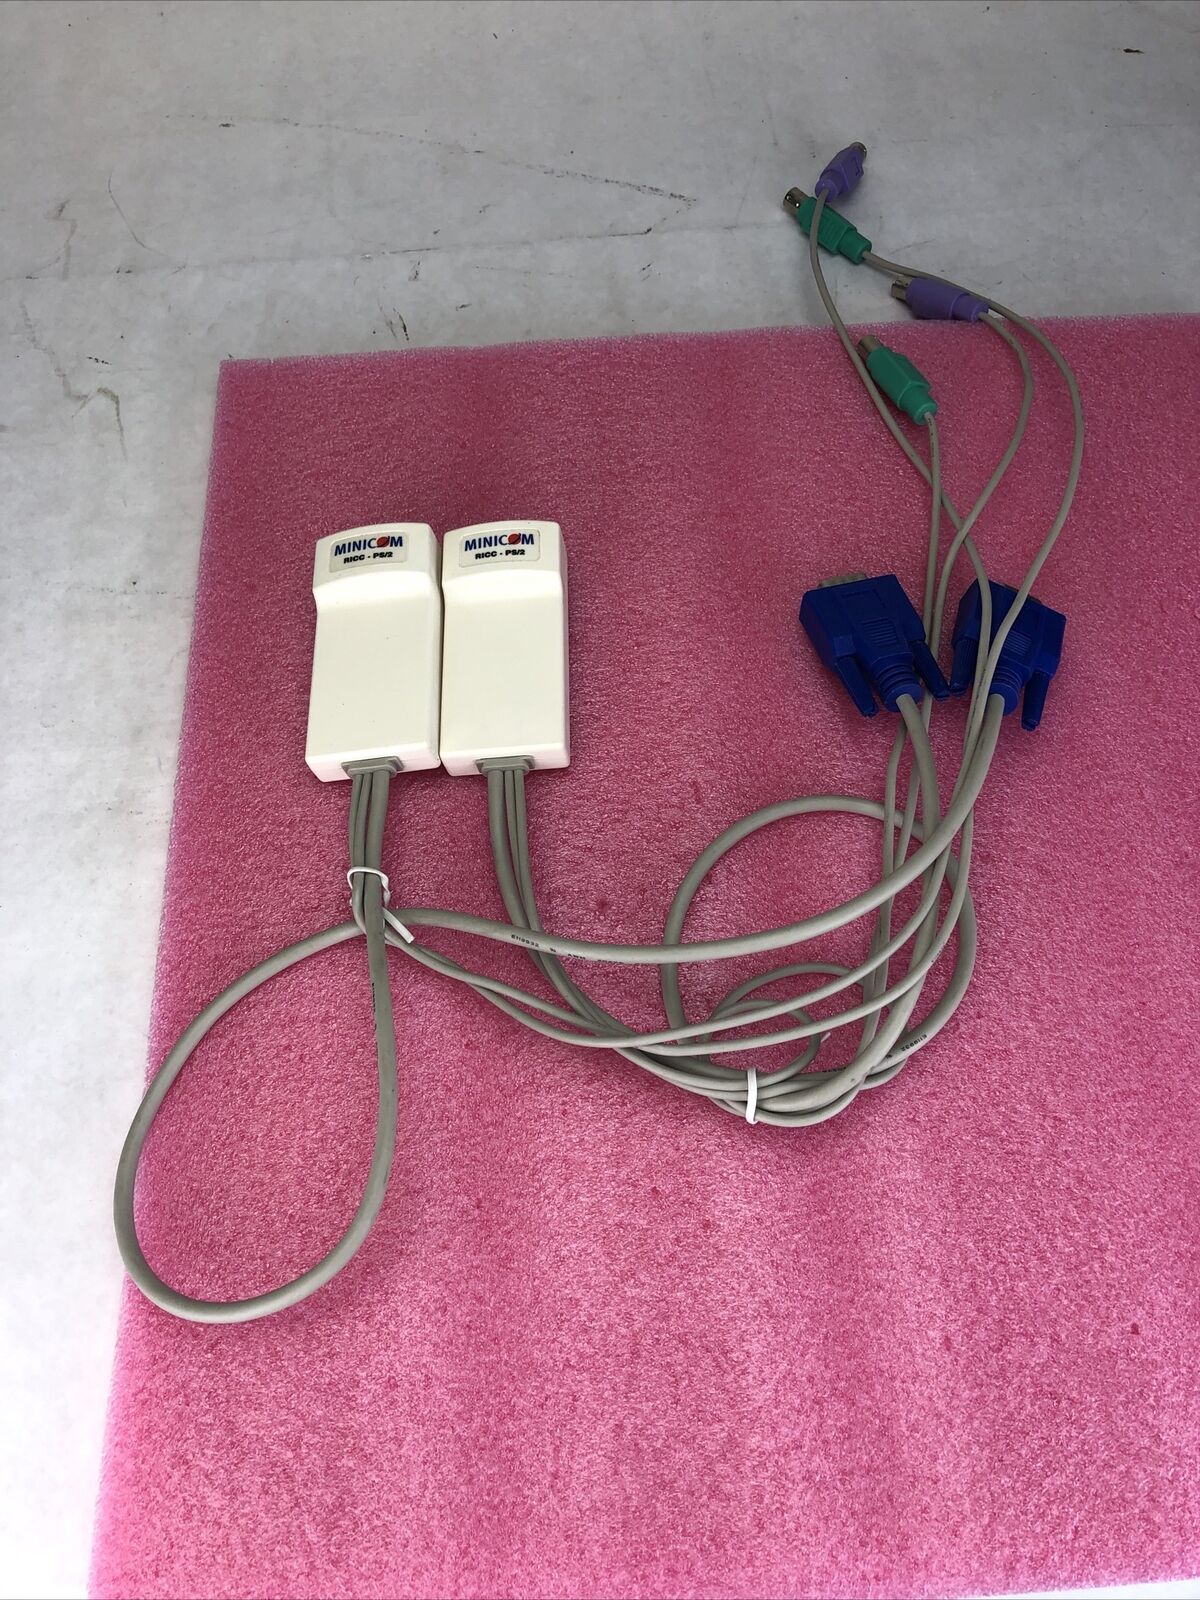 Lot of 2 Minicom 1SU51019 RICC-PS/2 VGA Network Cable KVM Switch Extender Remote